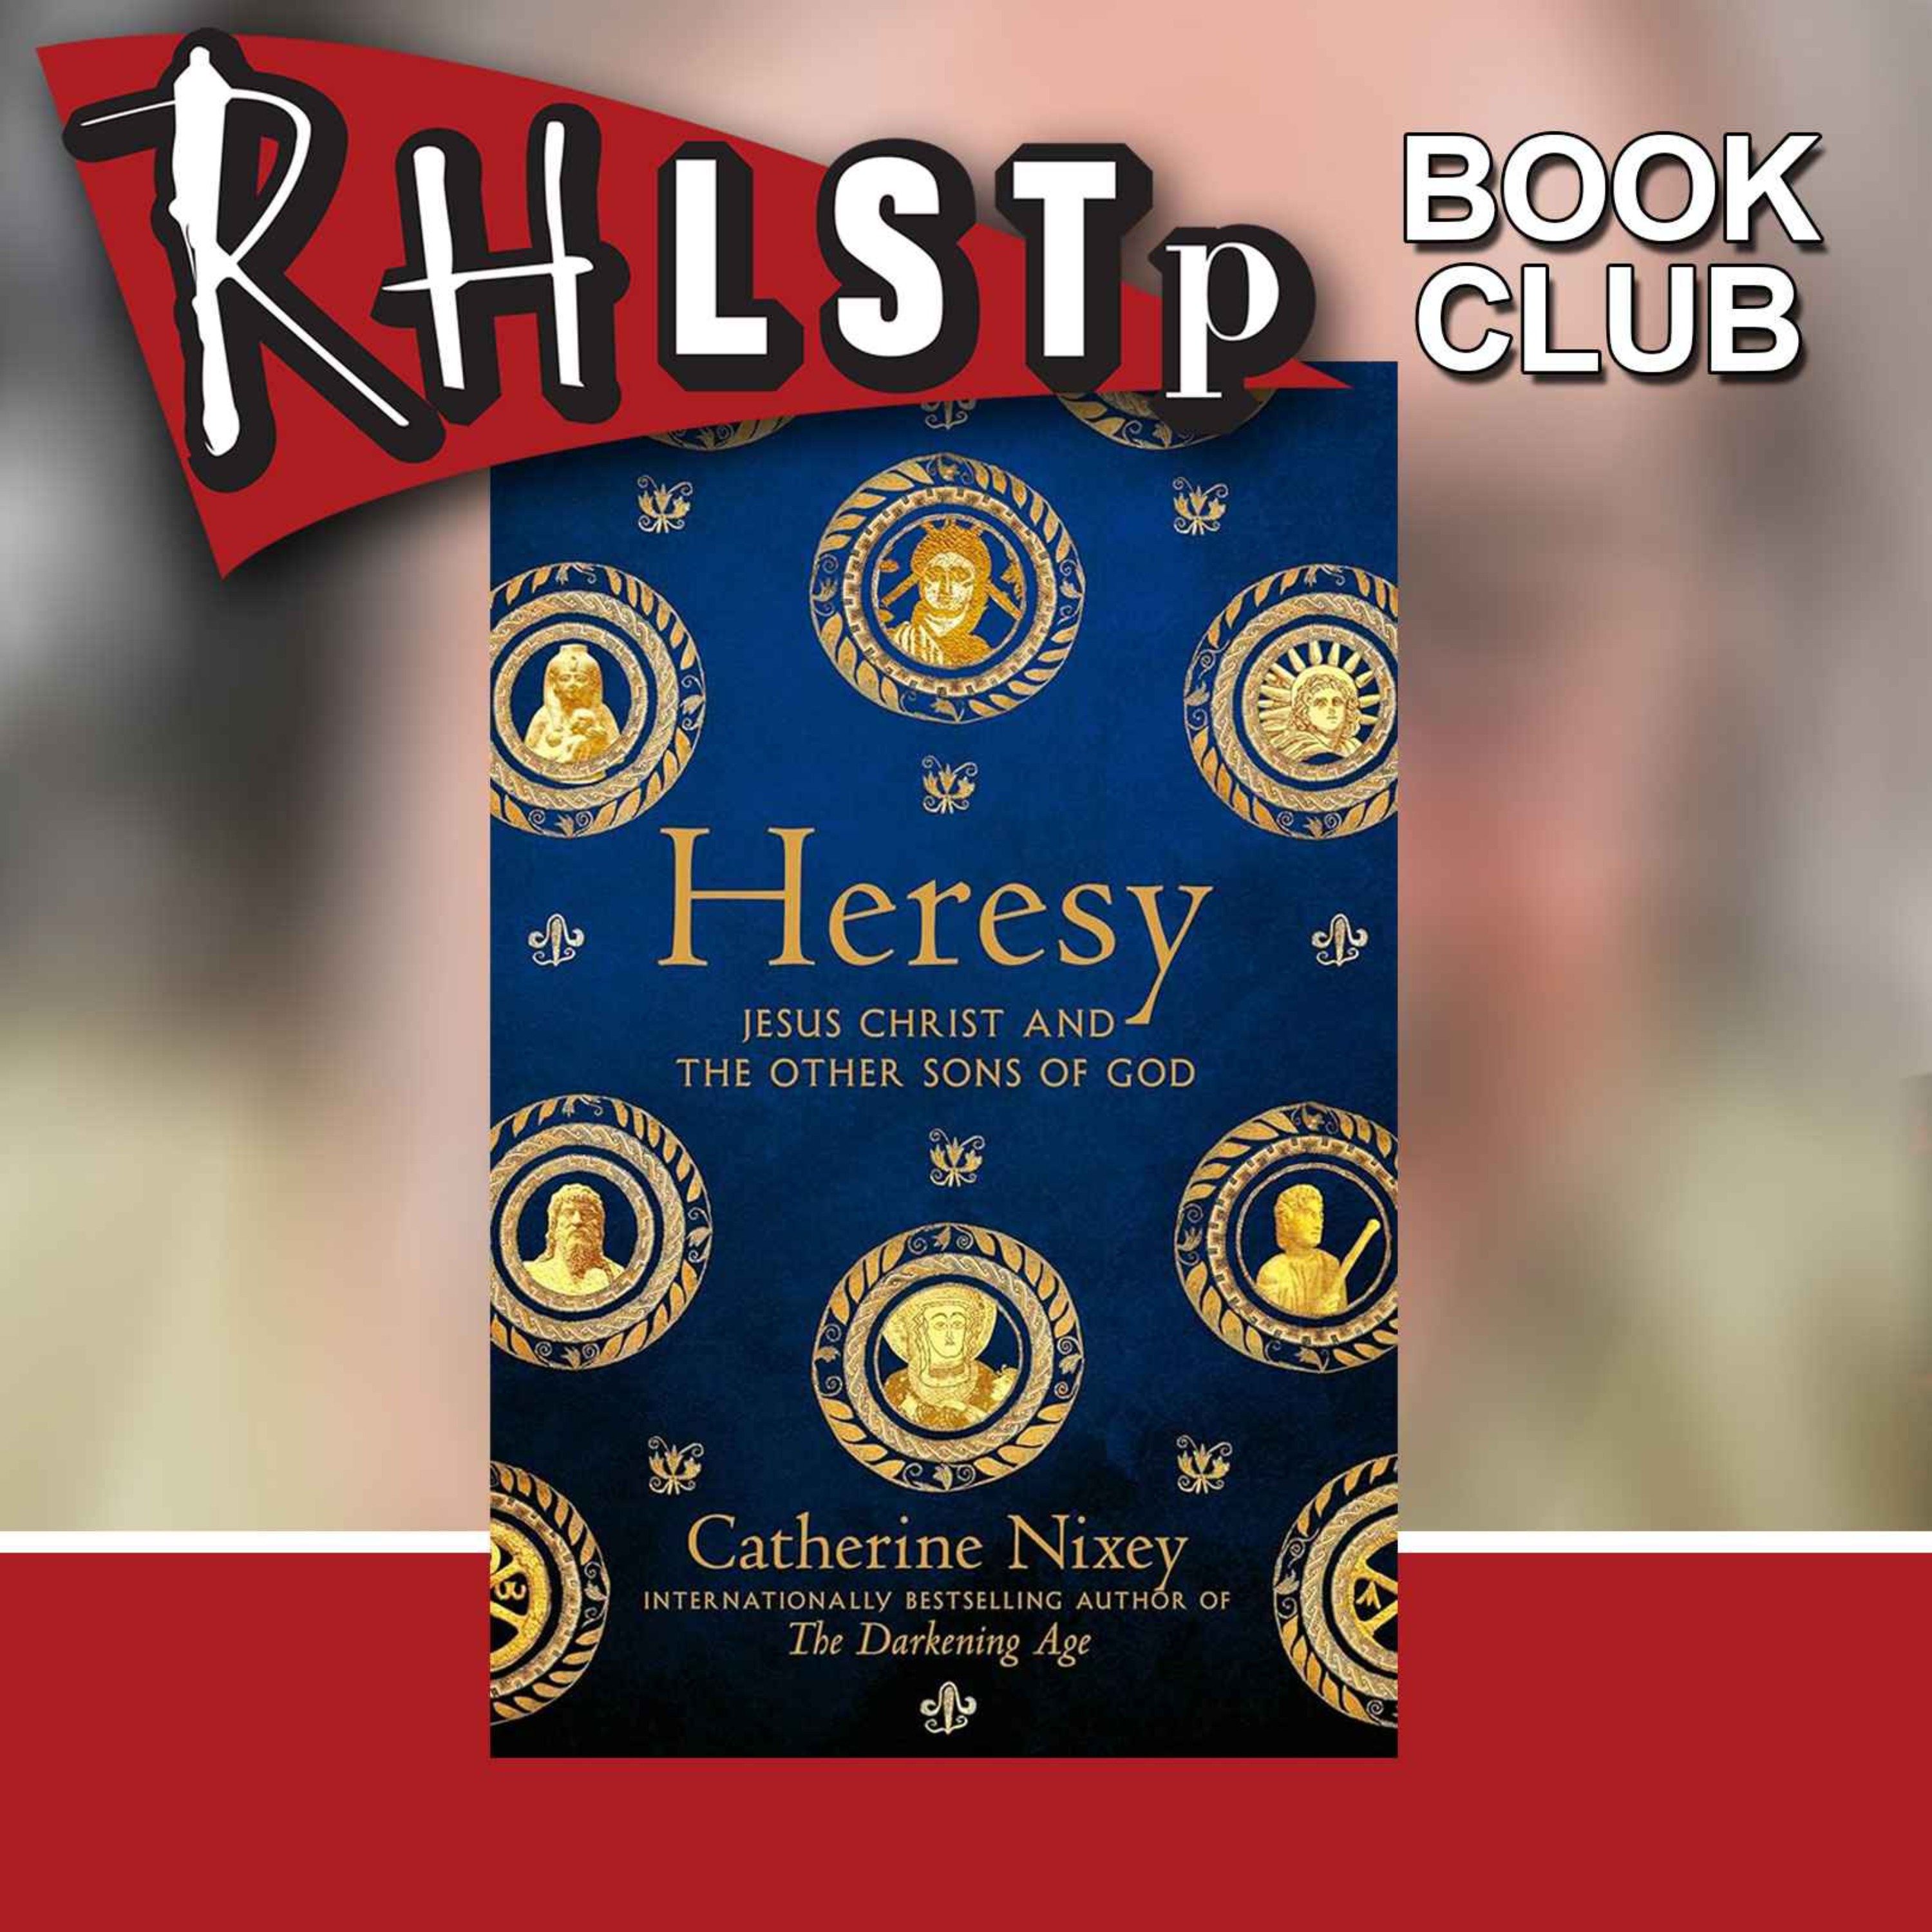 RHLSTP Book Club 99 - Catherine Nixey